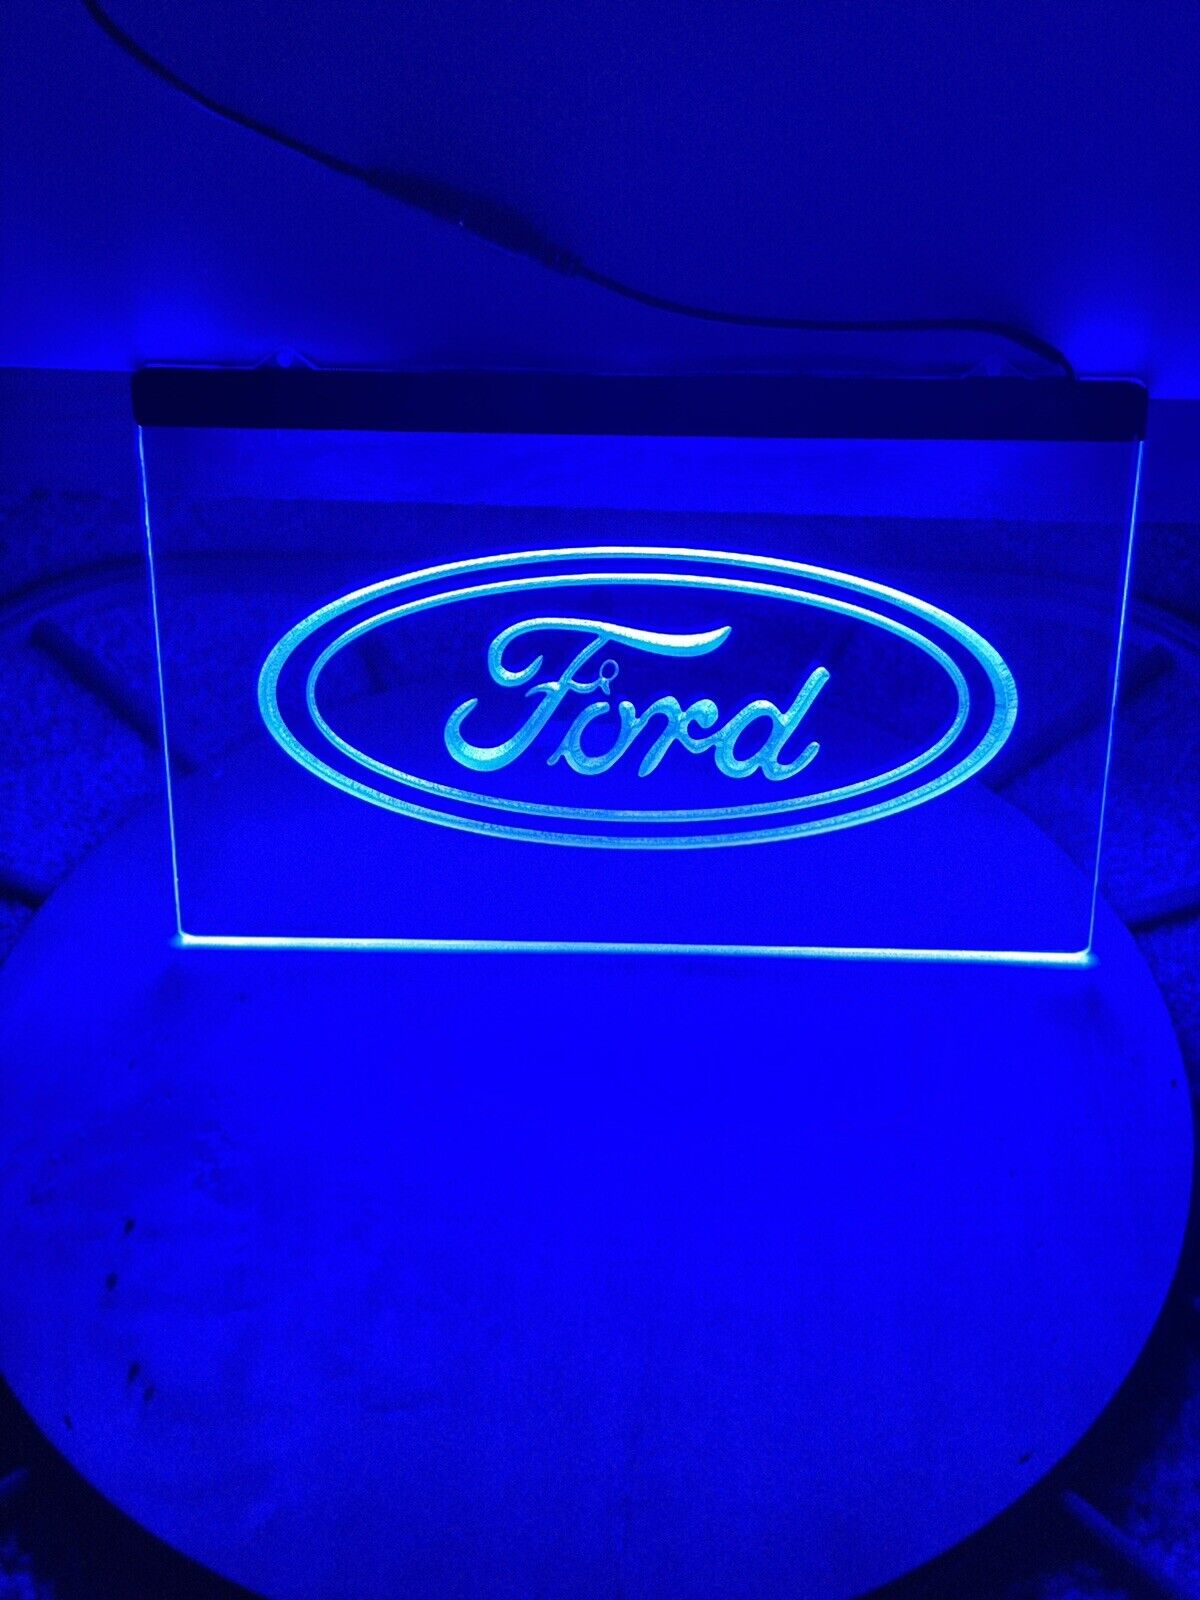 FORD LED NEON BLUE LIGHT SIGN 8x12